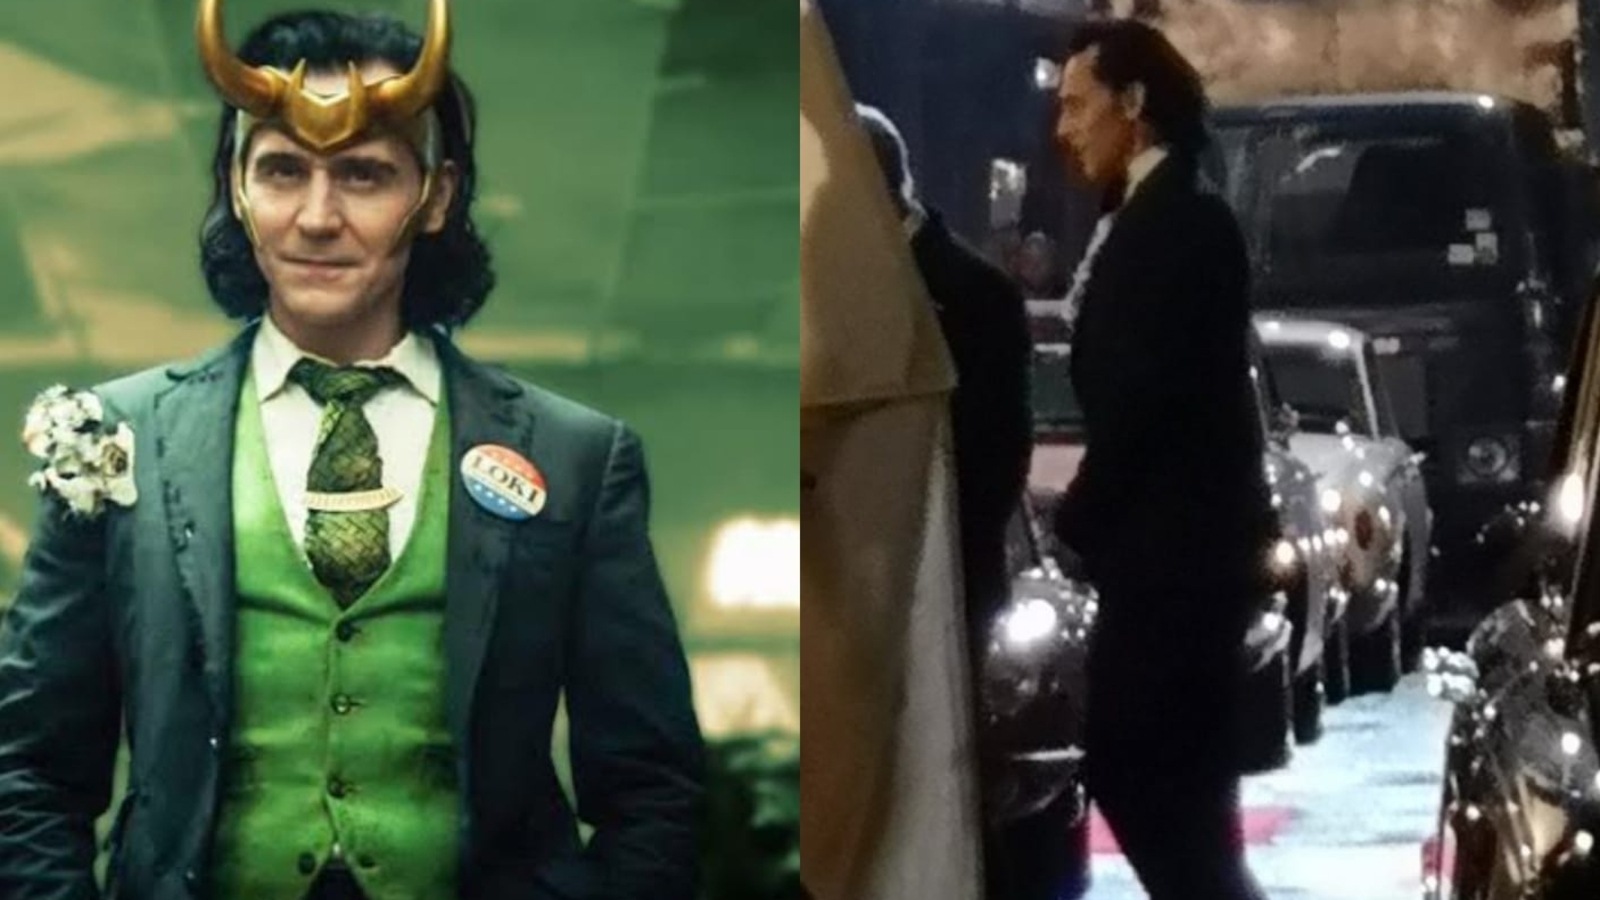 Loki 2 set pics show Tom Hiddleston back as trickster, reveal Eternals connect | Web Series